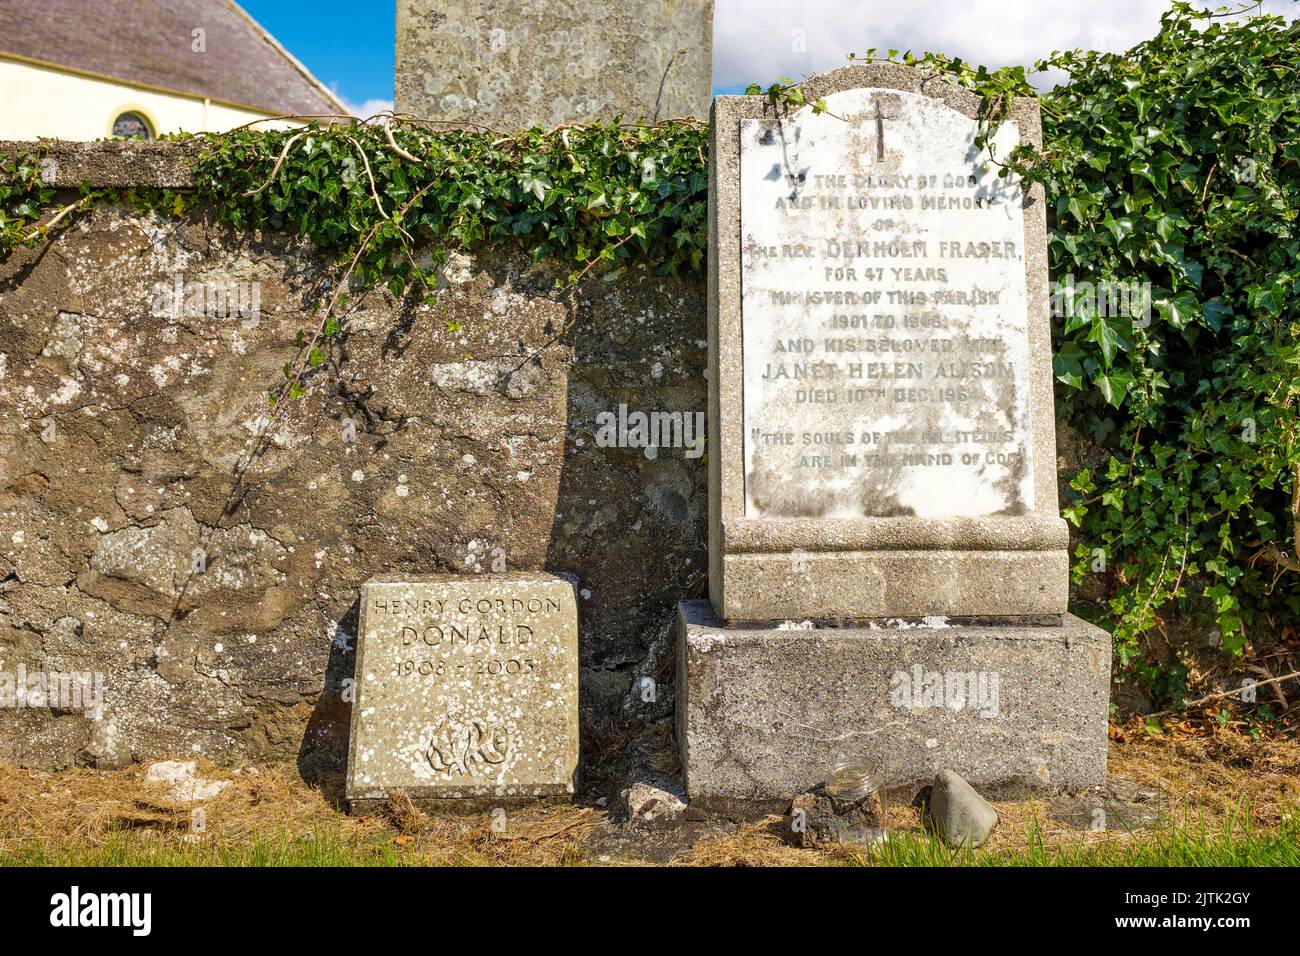 Headstones of author Henry Gordon Donald, and the Rev Denholm Fraser at Sprouston Kirk, in the Scottish Borders, Scotland, UK Stock Photo